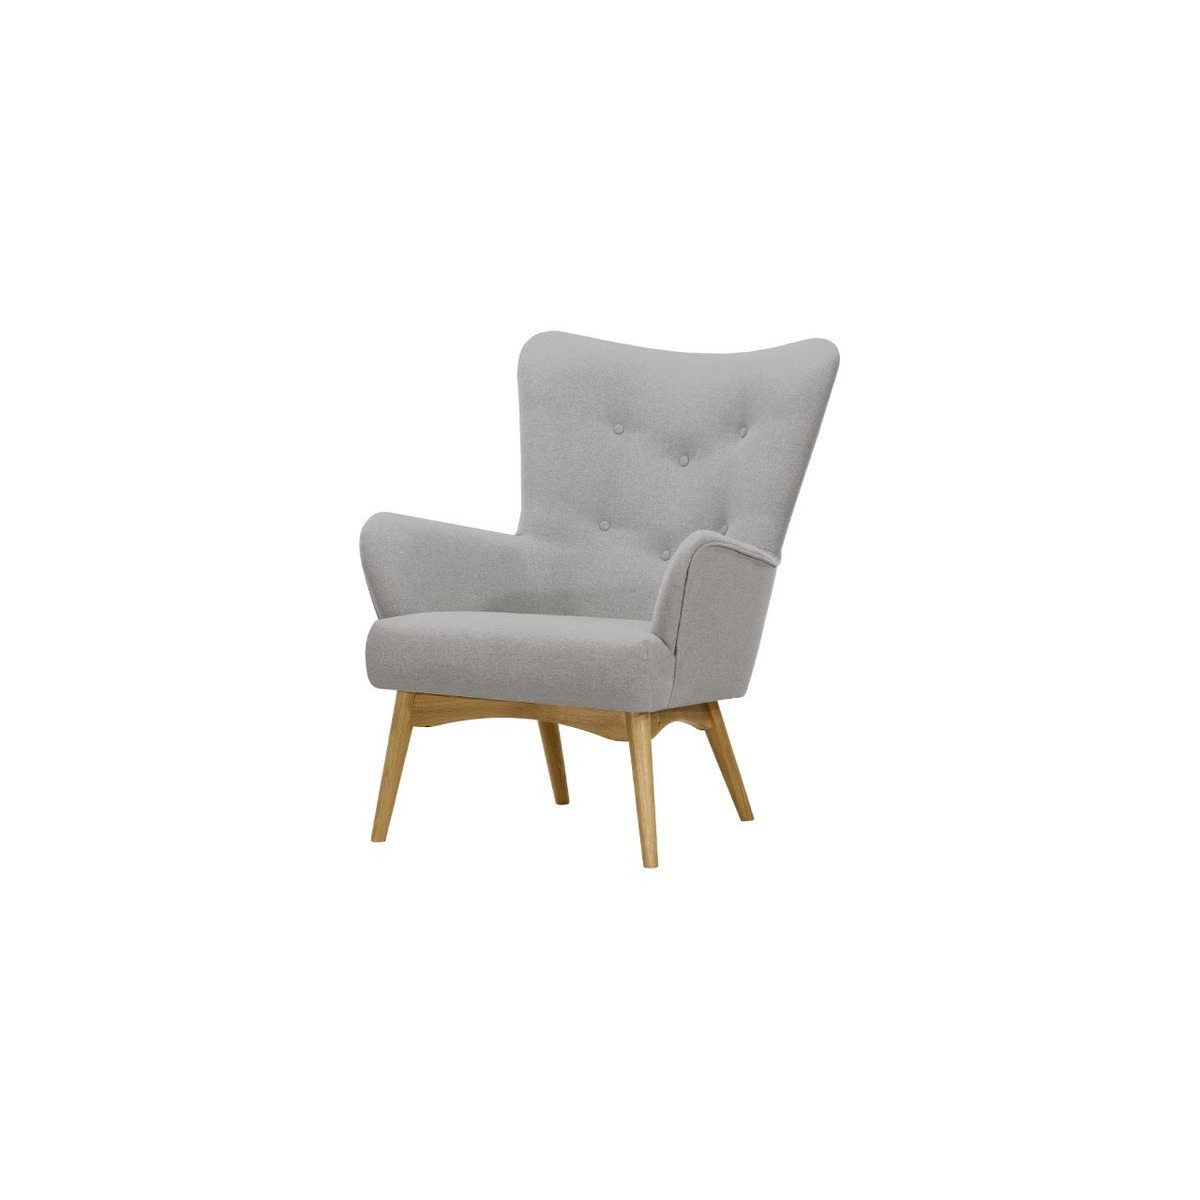 Savano Wingback Chair, light grey, Leg colour: like oak - image 1